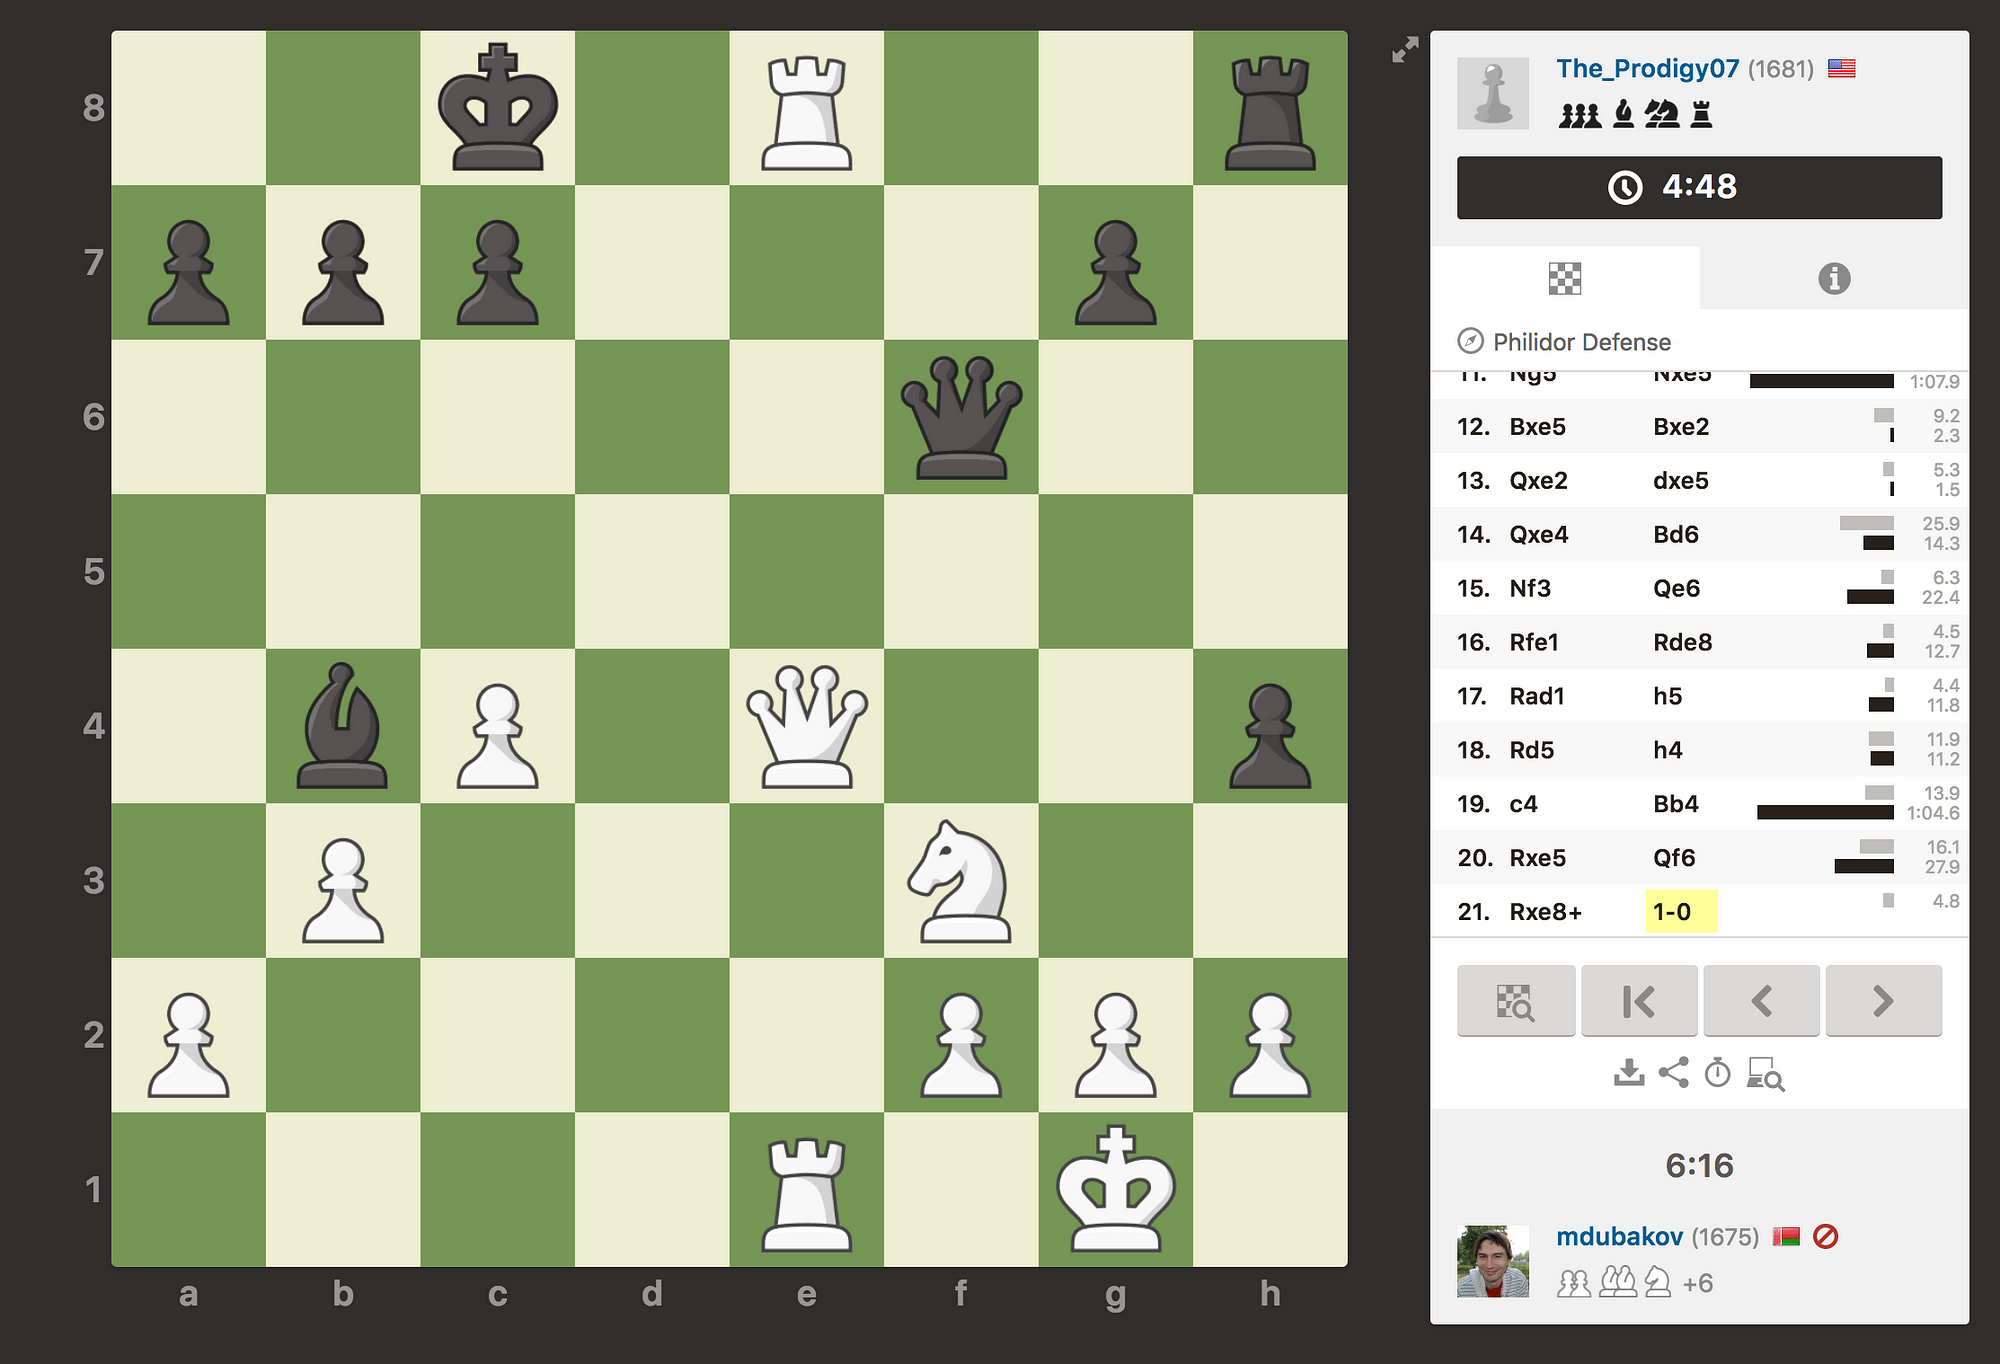 [Разбил](https://www.chess.com/live/game/152114170?username=mdubakov) защиту Филидора